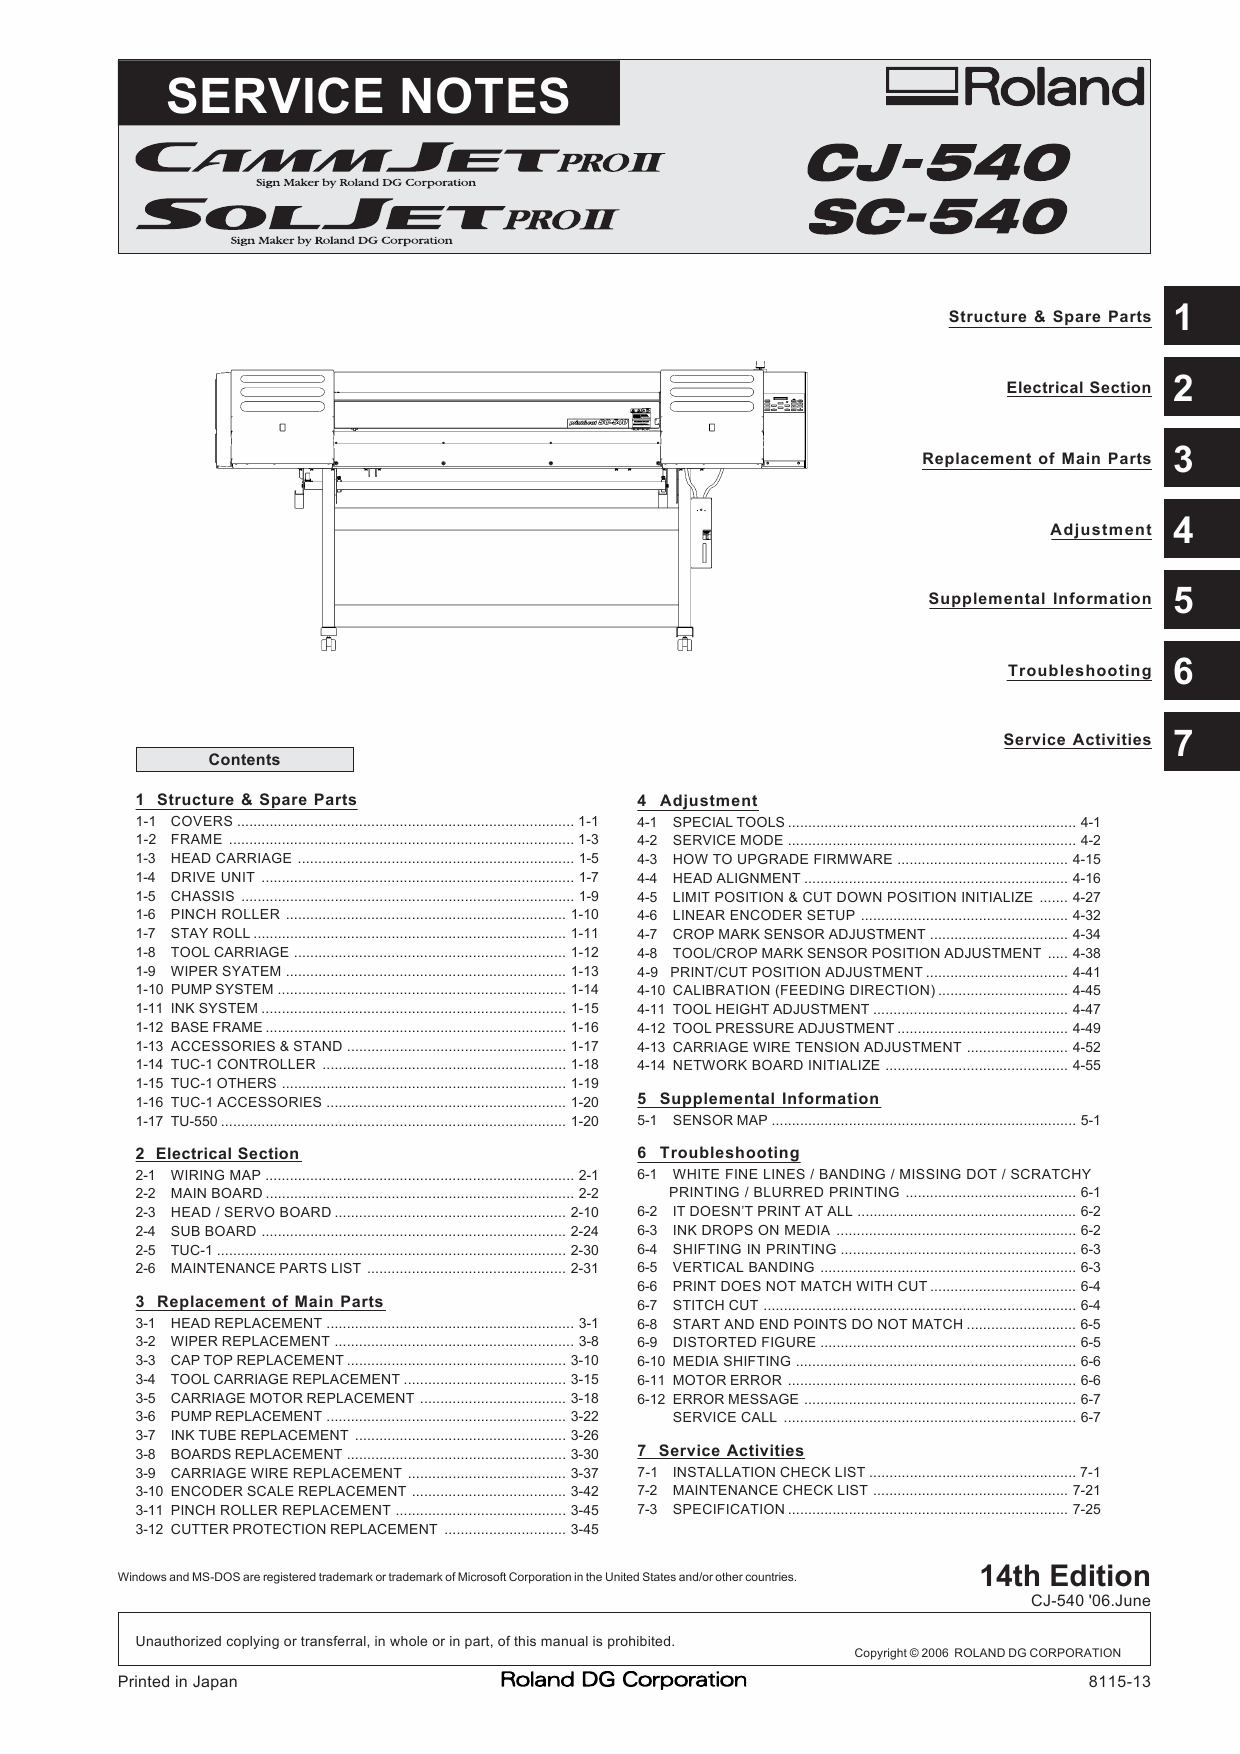 Roland CAMMJET CJ 540 Service Notes Manual-1